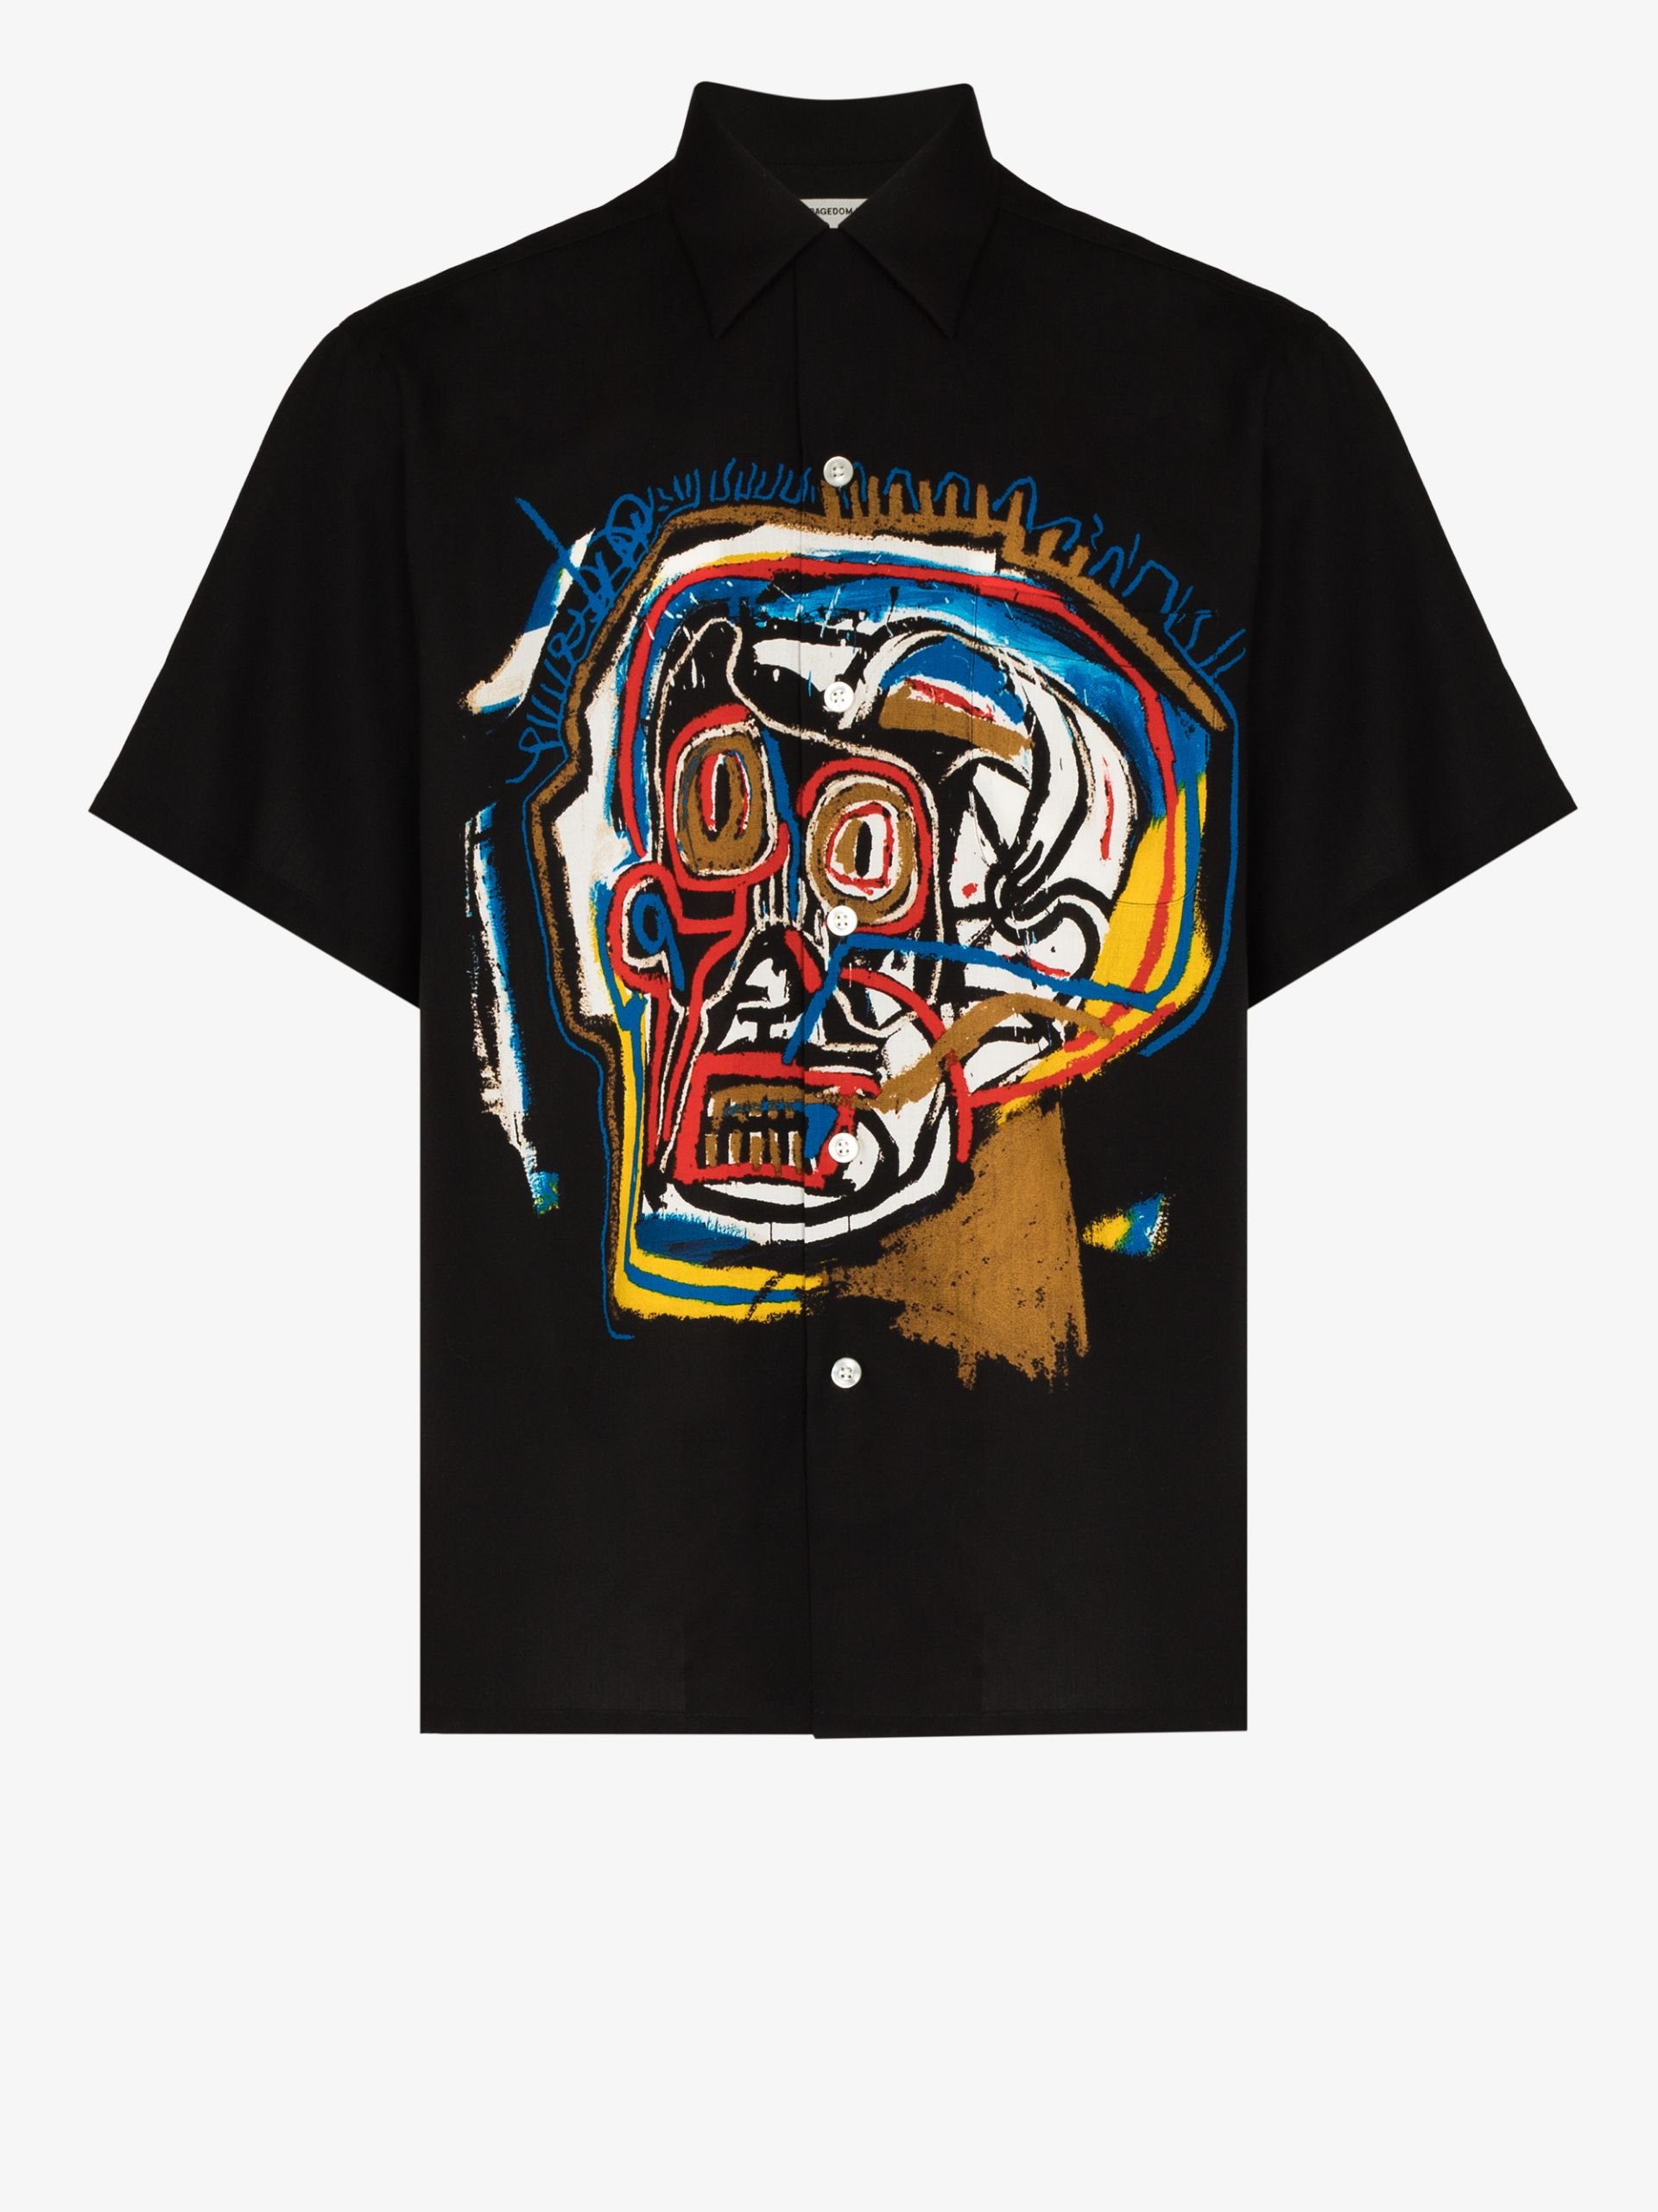 Basquiat Skull T-Shirt, Black – ROME PAYS OFF